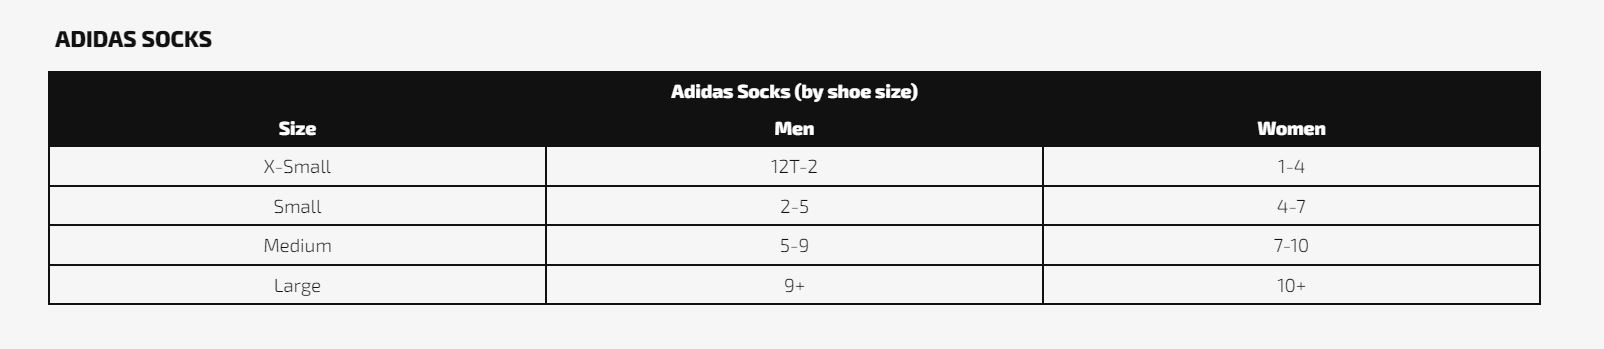 adidas sock sizes chart